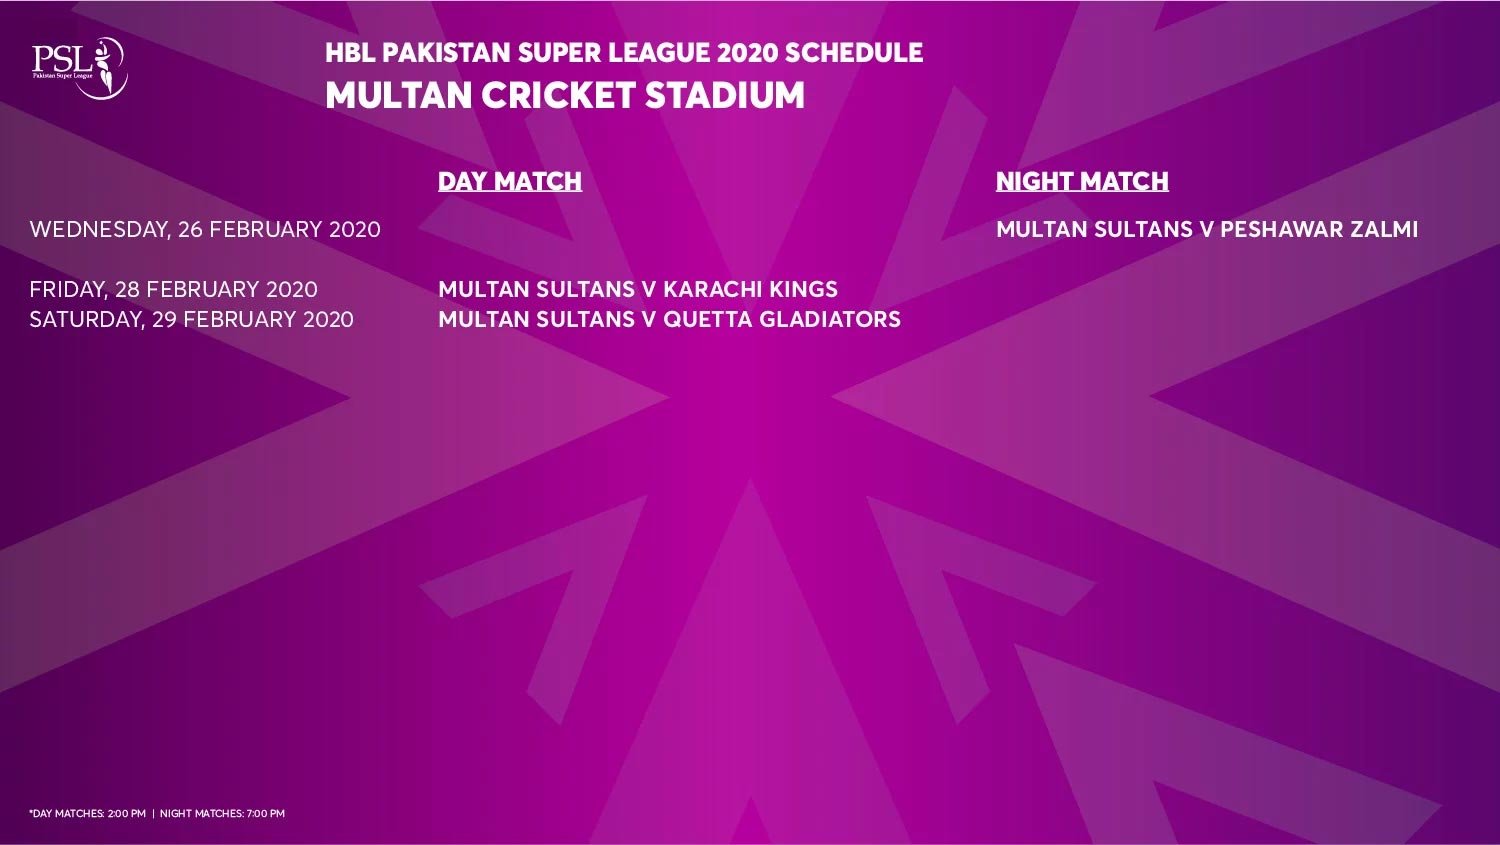  پاکستان سپر لیگ 2020 کا شیڈول جاری